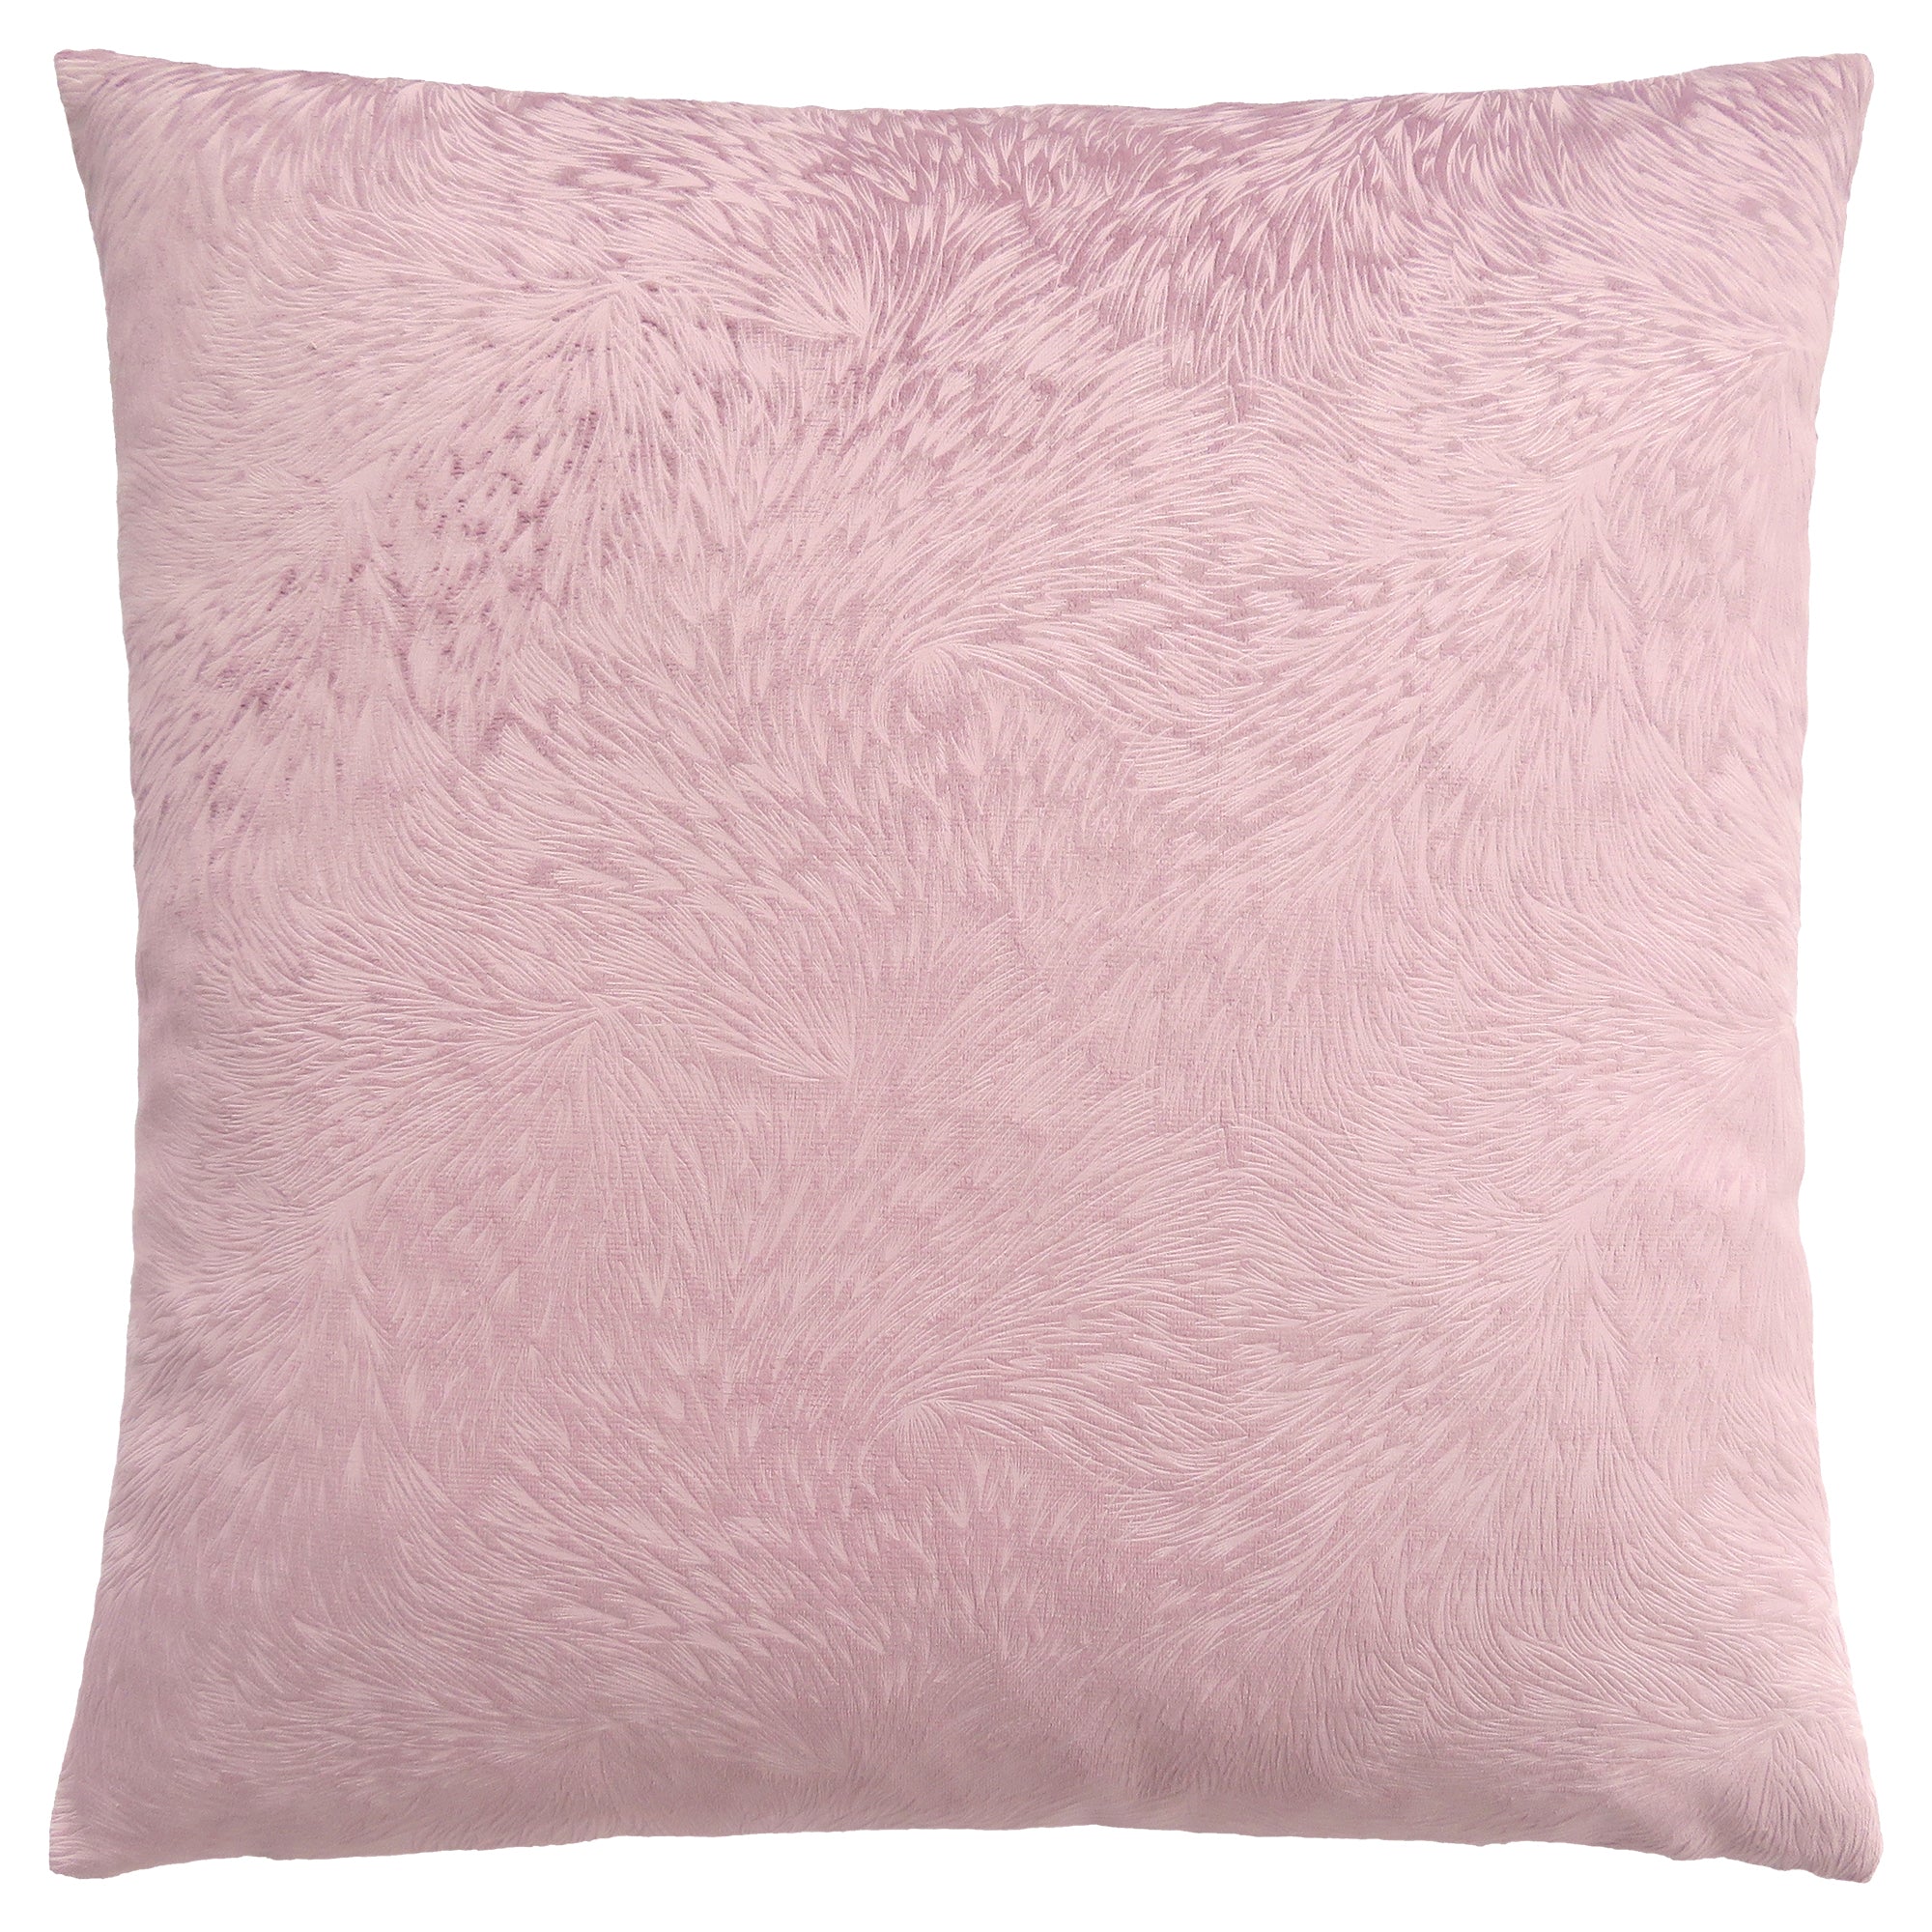 Pillow - 18X 18 / Light Pink Feathered Velvet / 1Pc